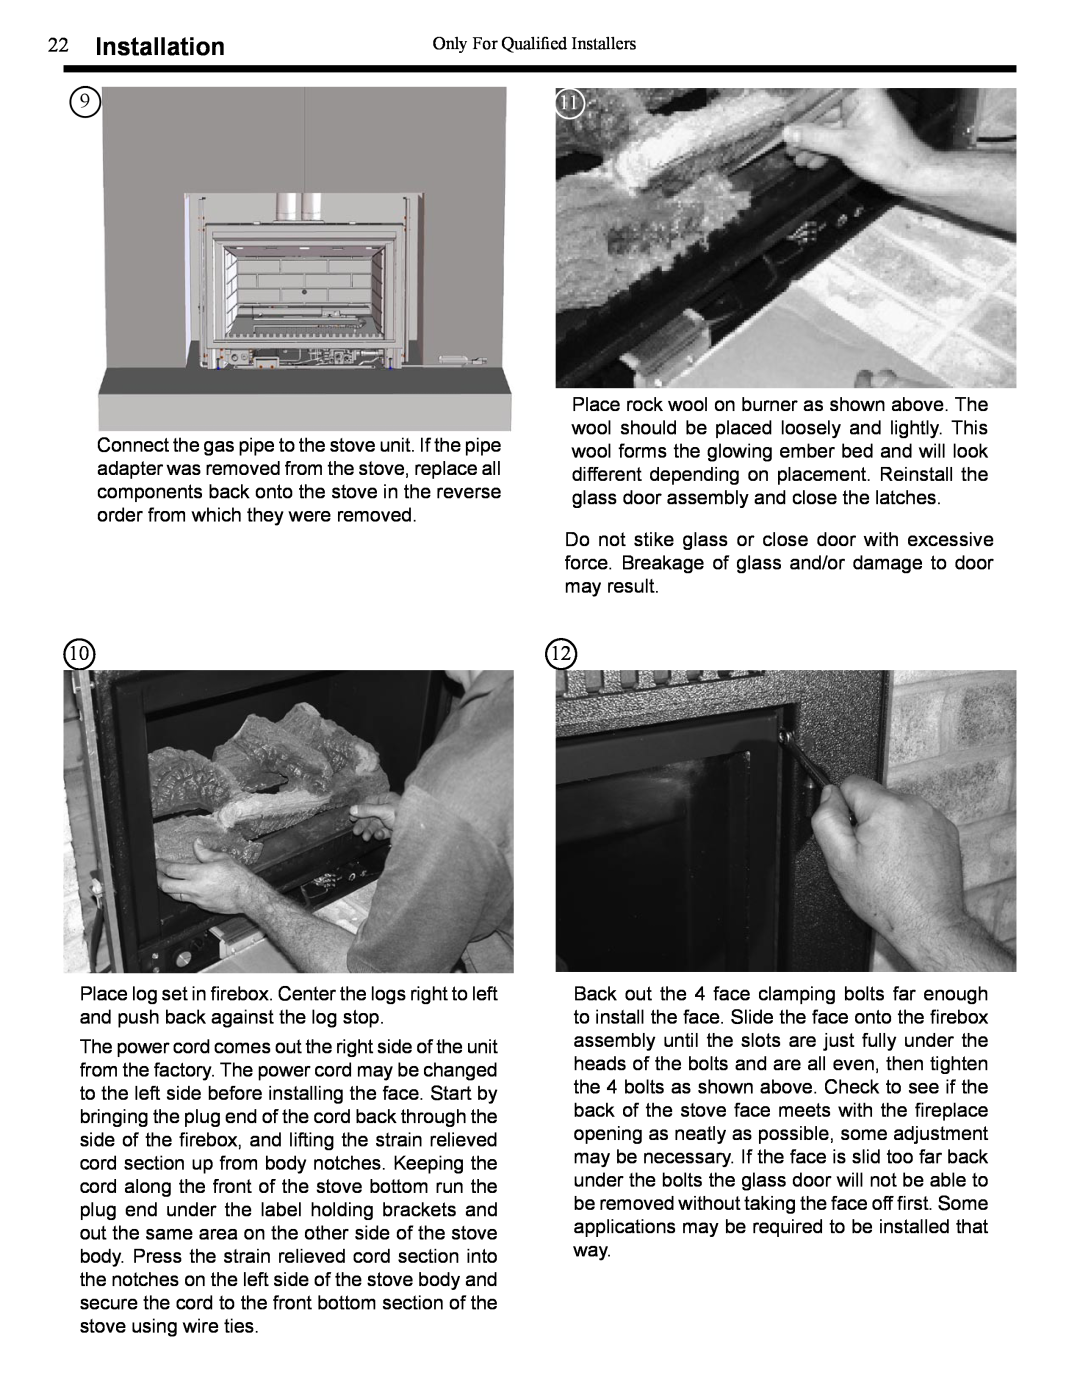 Harman Stove Company XL owner manual Installation 